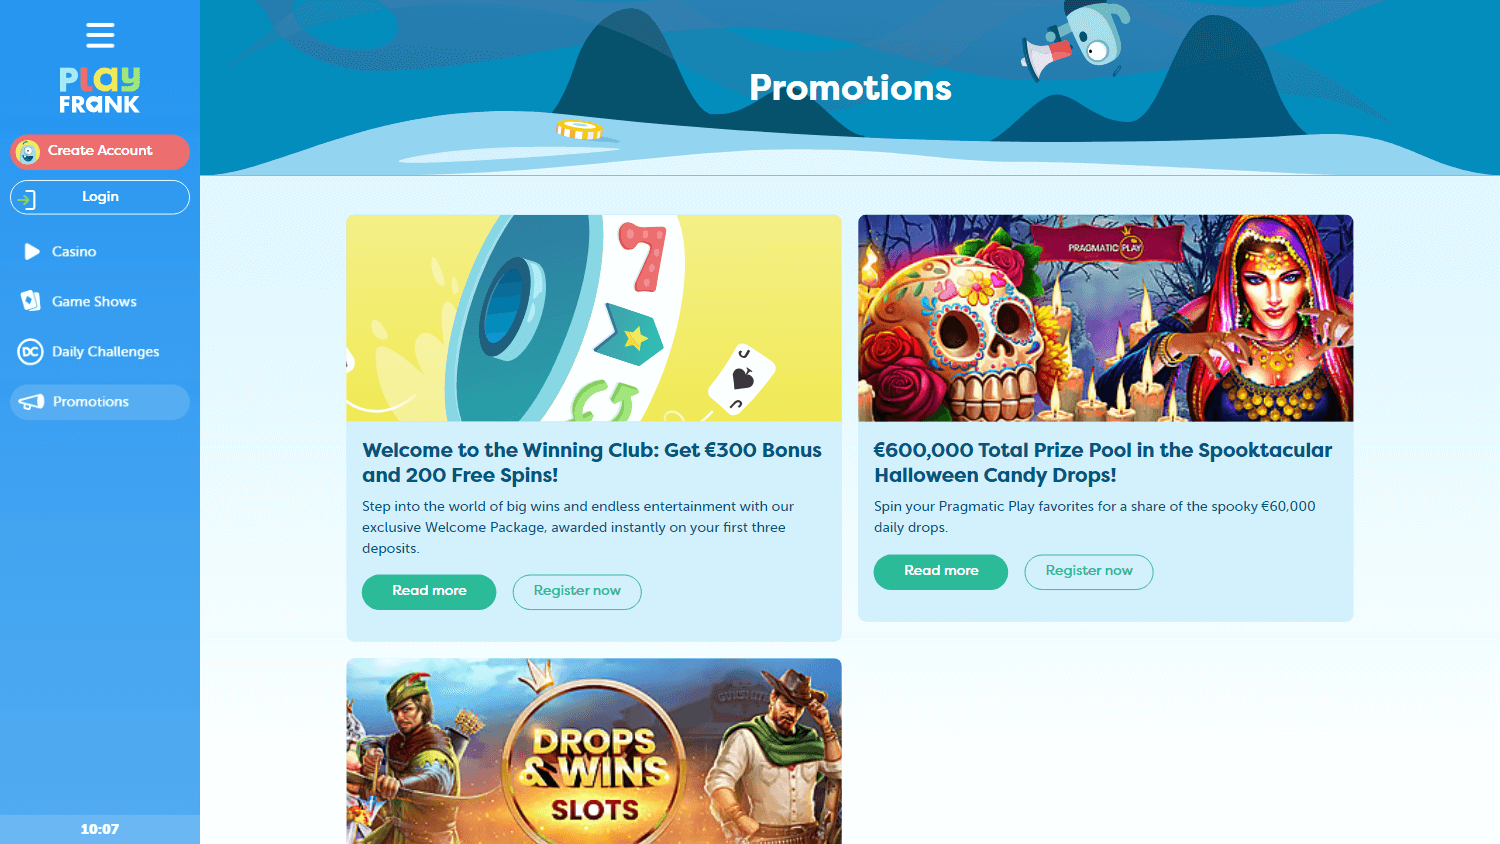 playfrank_casino_promotions_desktop